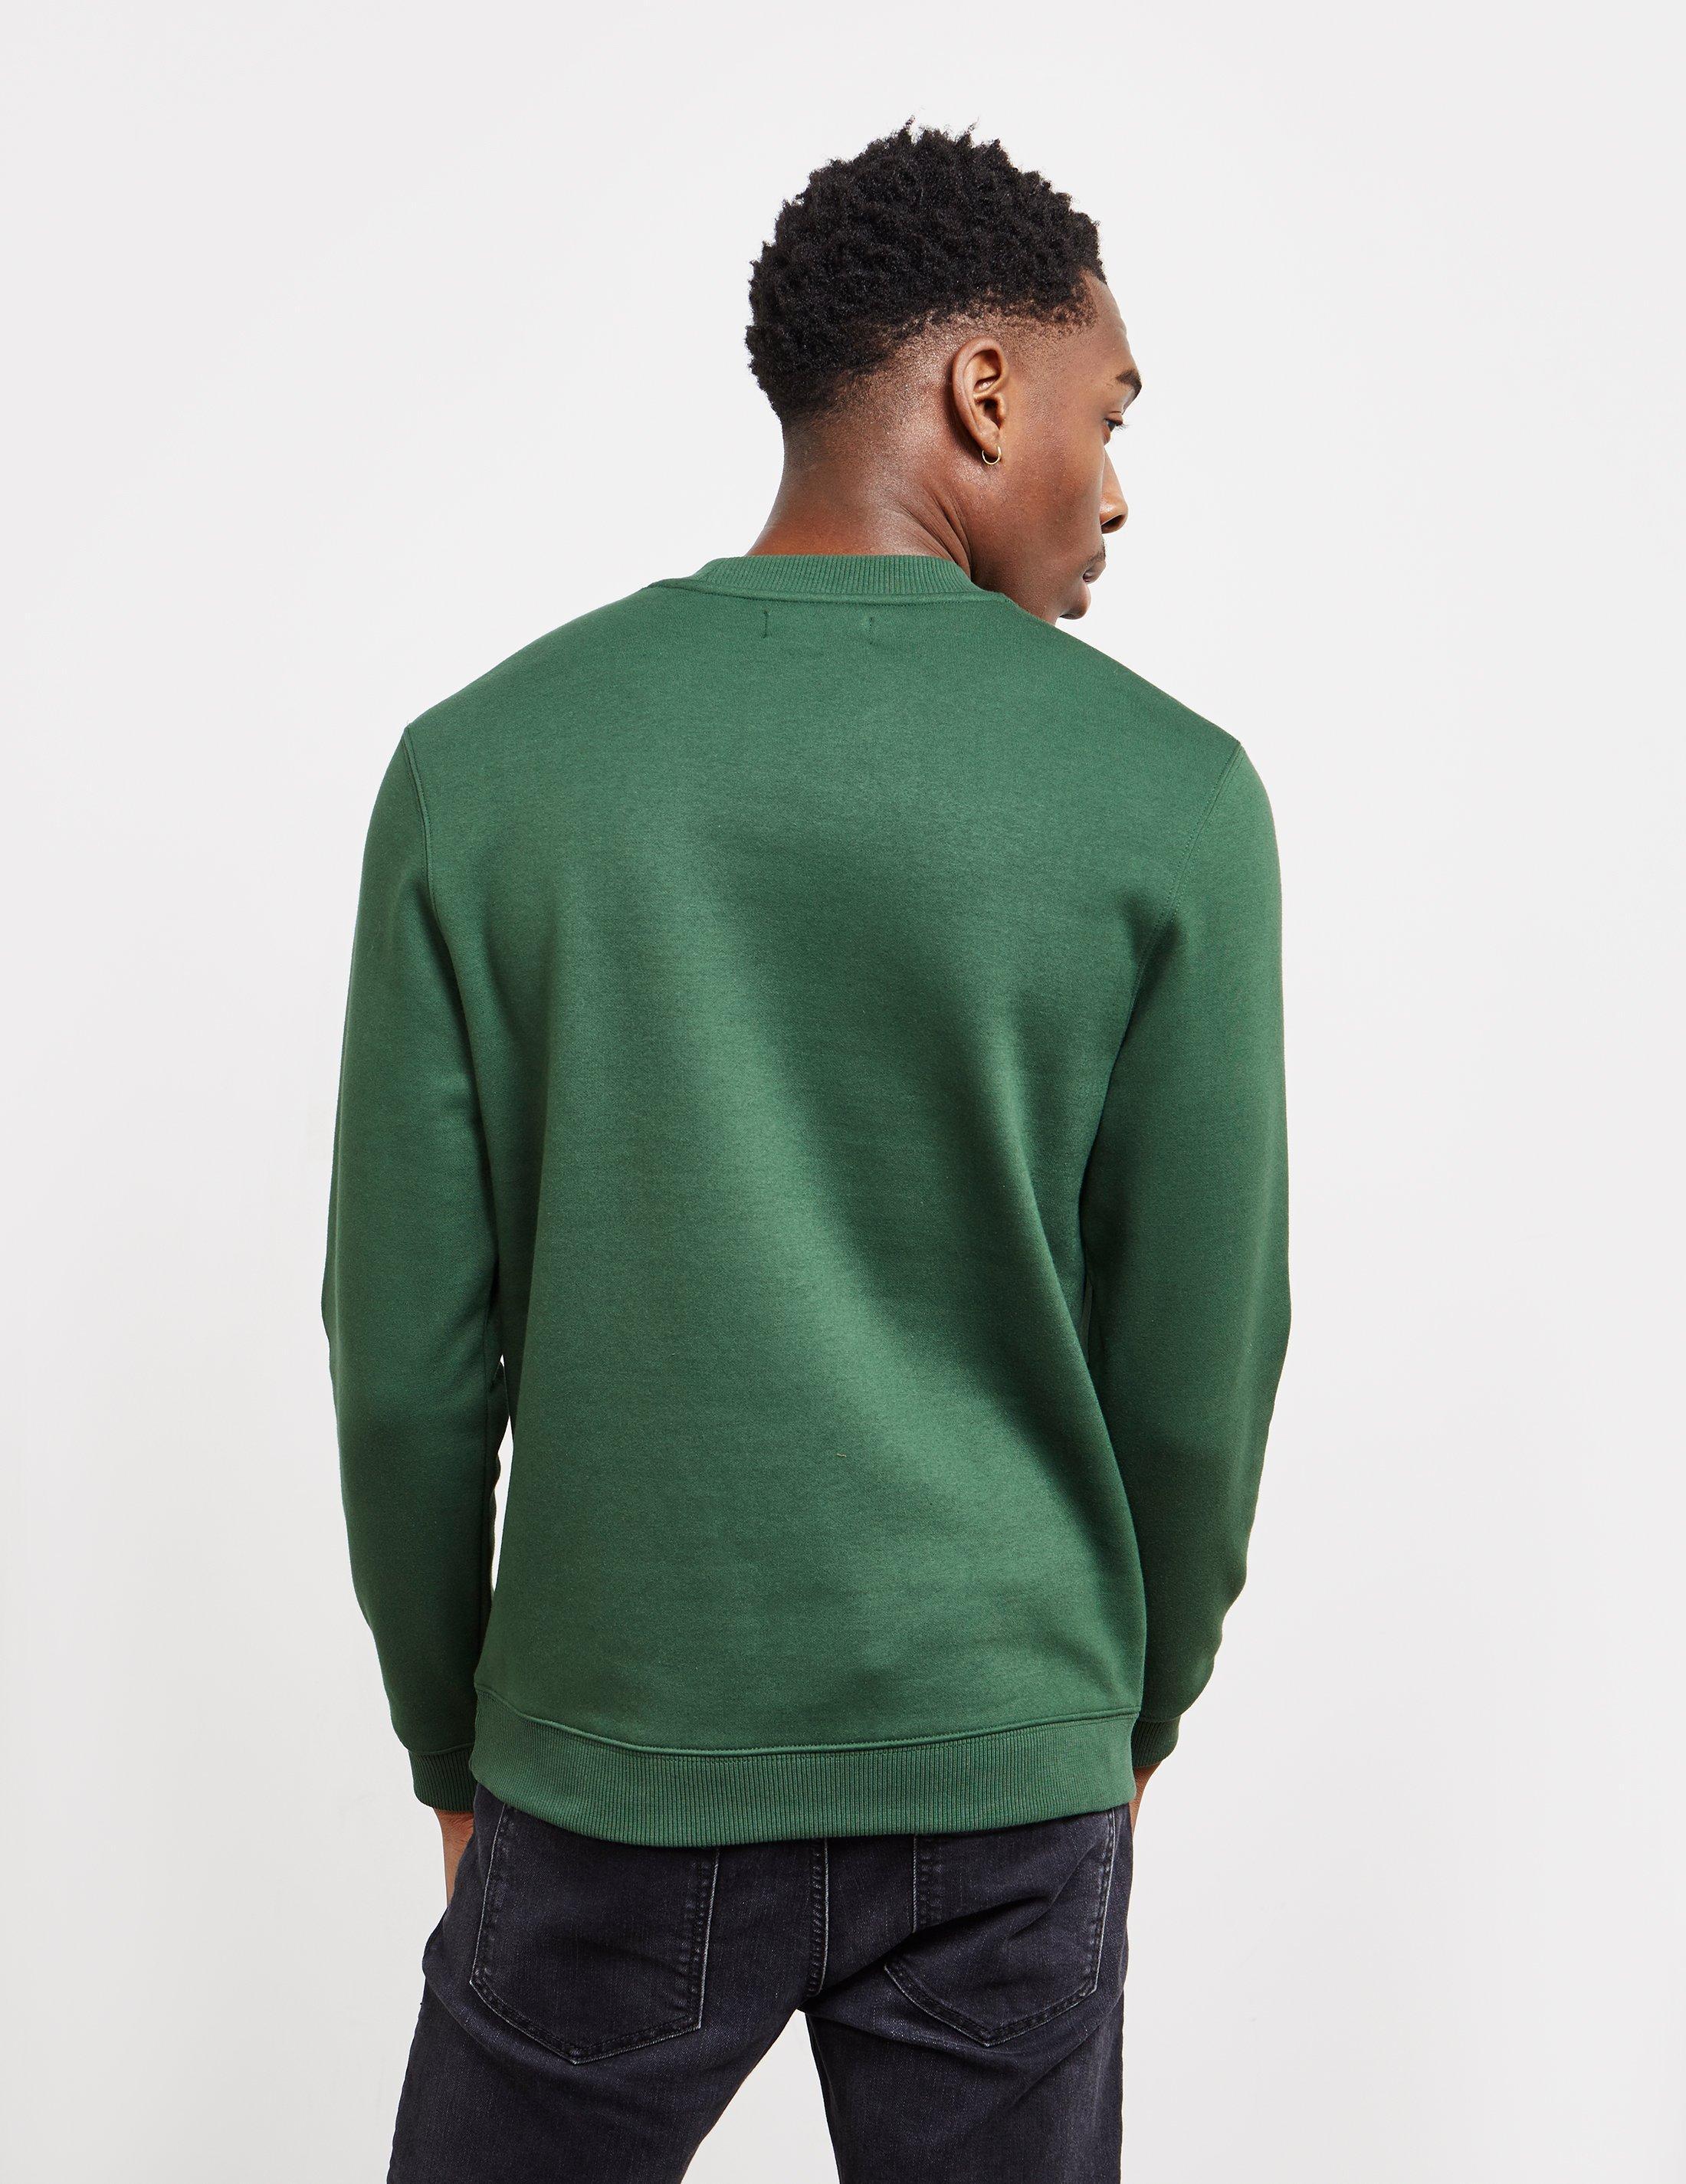 Fred Perry Cotton Fleeceback Green Sweatshirt for Men - Lyst